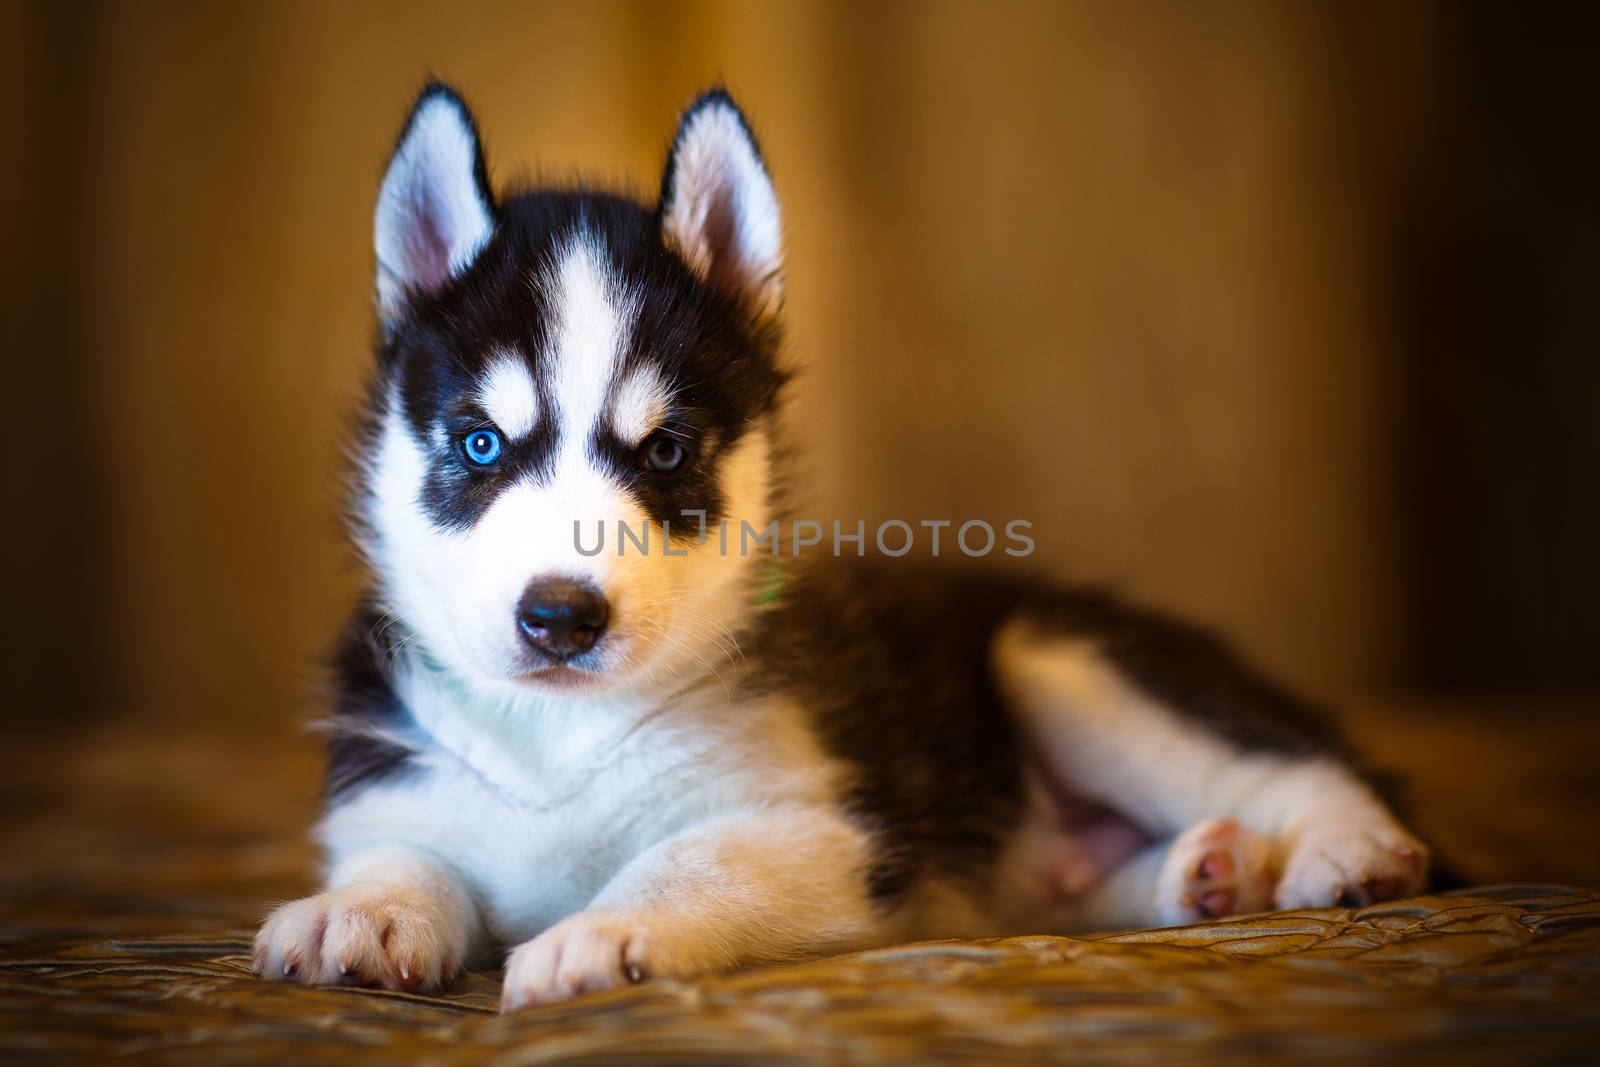 Siberian husky puppy by mrgarry